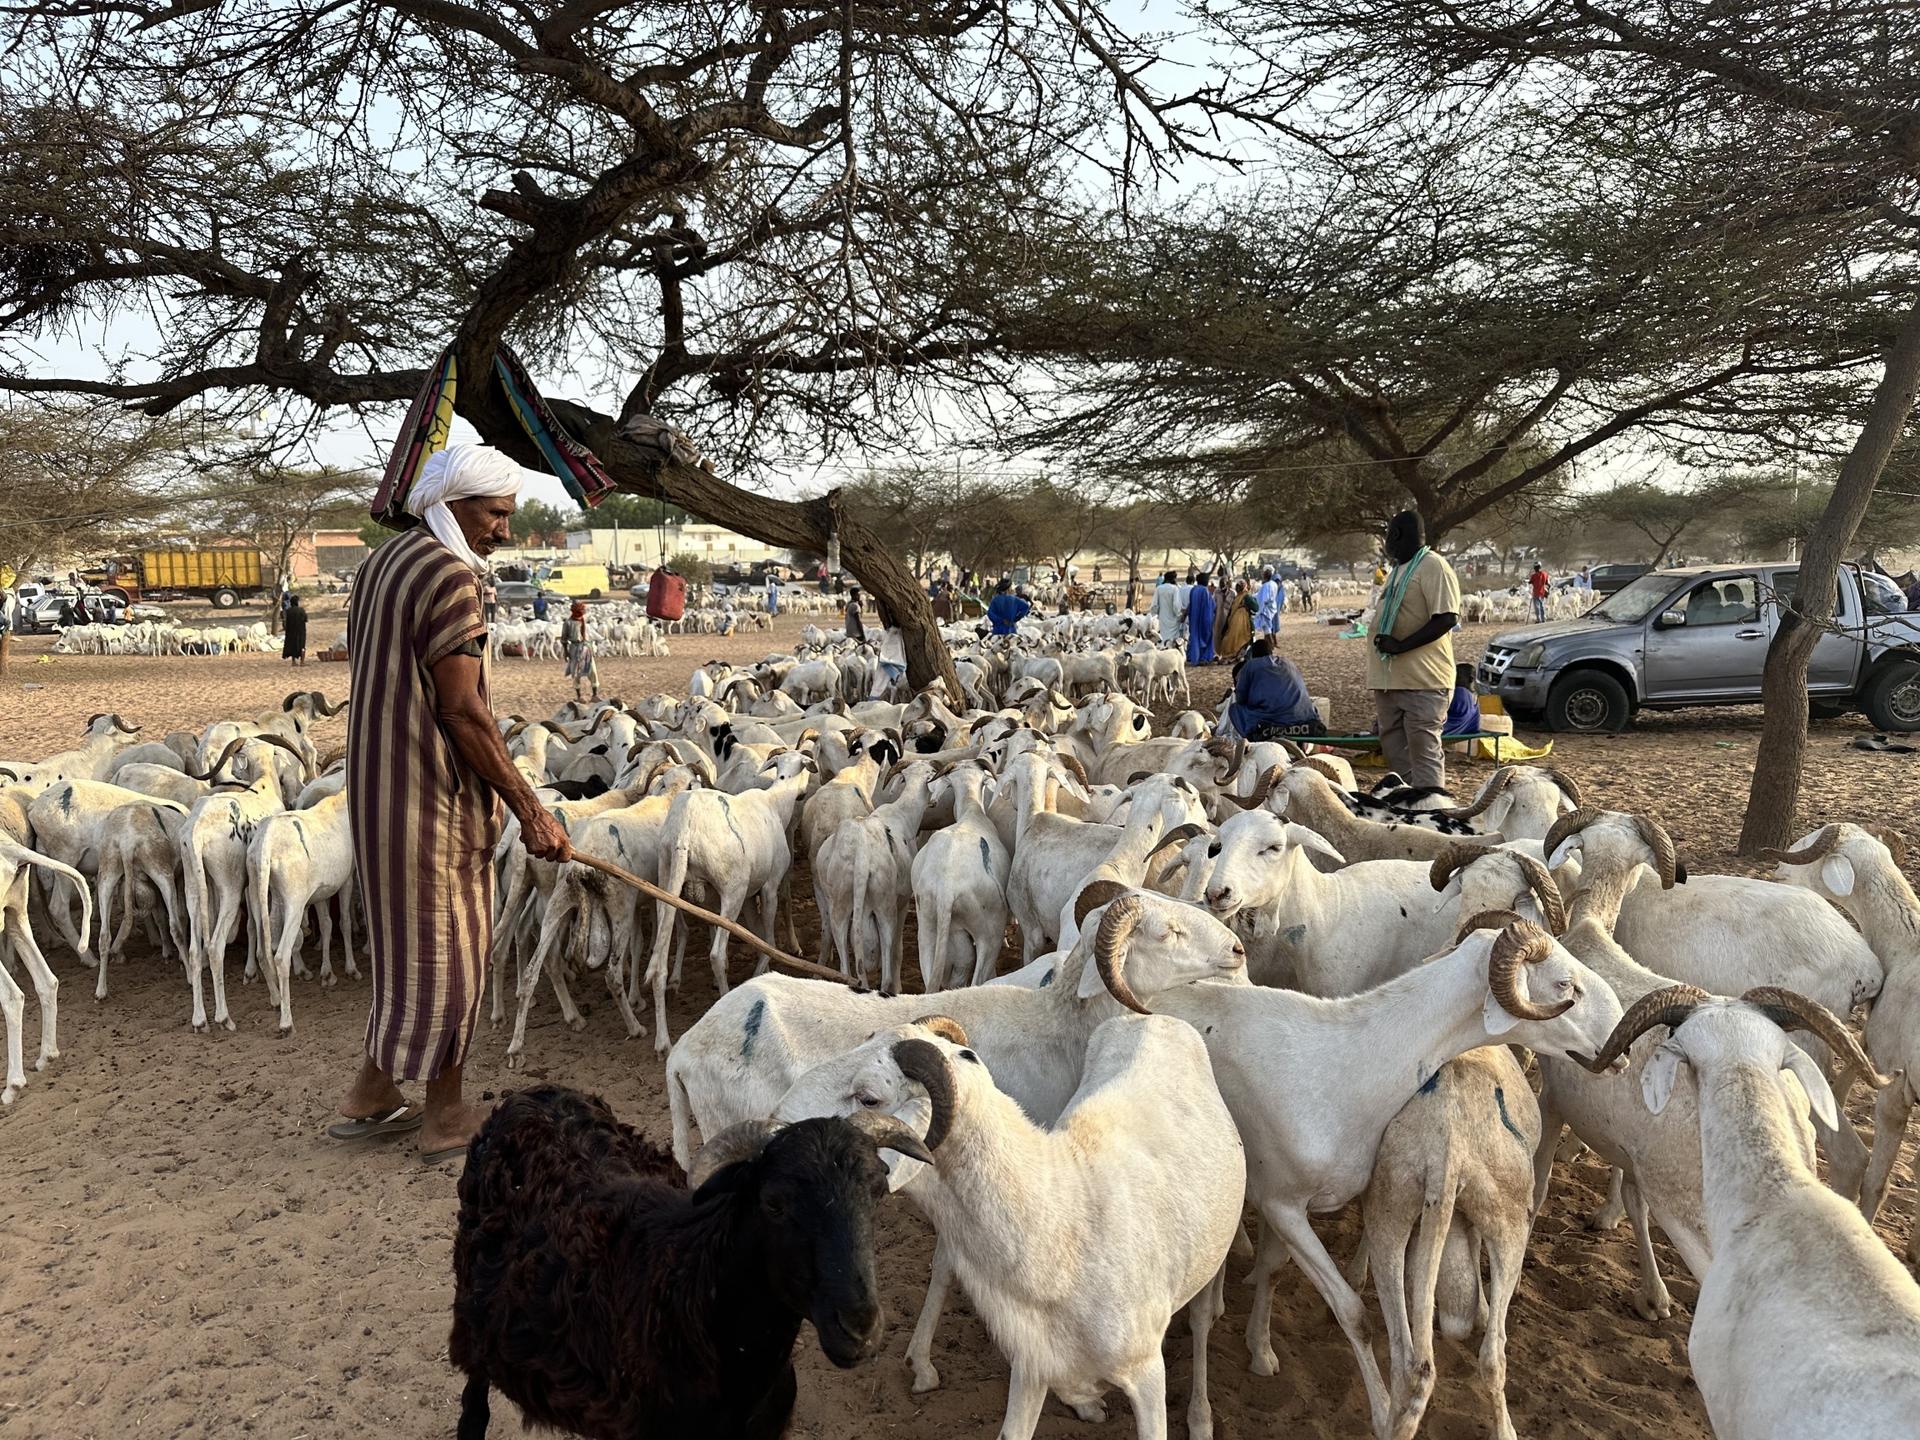 Mauritanian merchants sell sheep ahead of Eid al-Adha in an open-air market just south of St. Louis, Senegal.